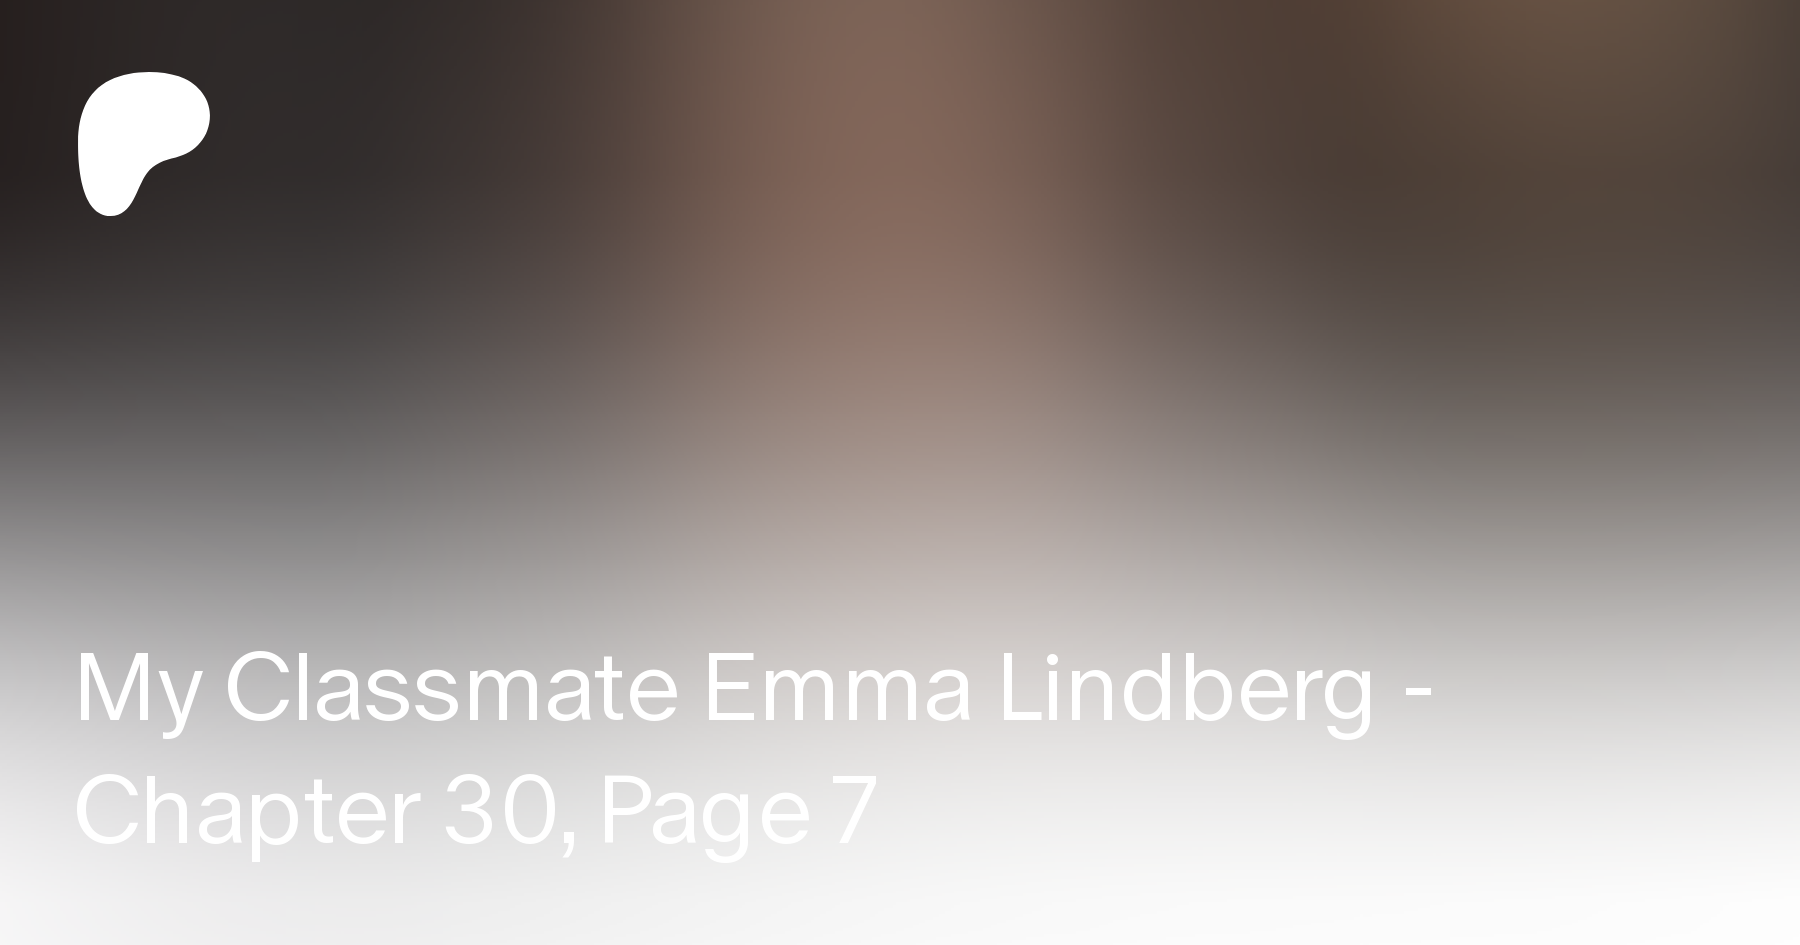 My classmate emma lindberg